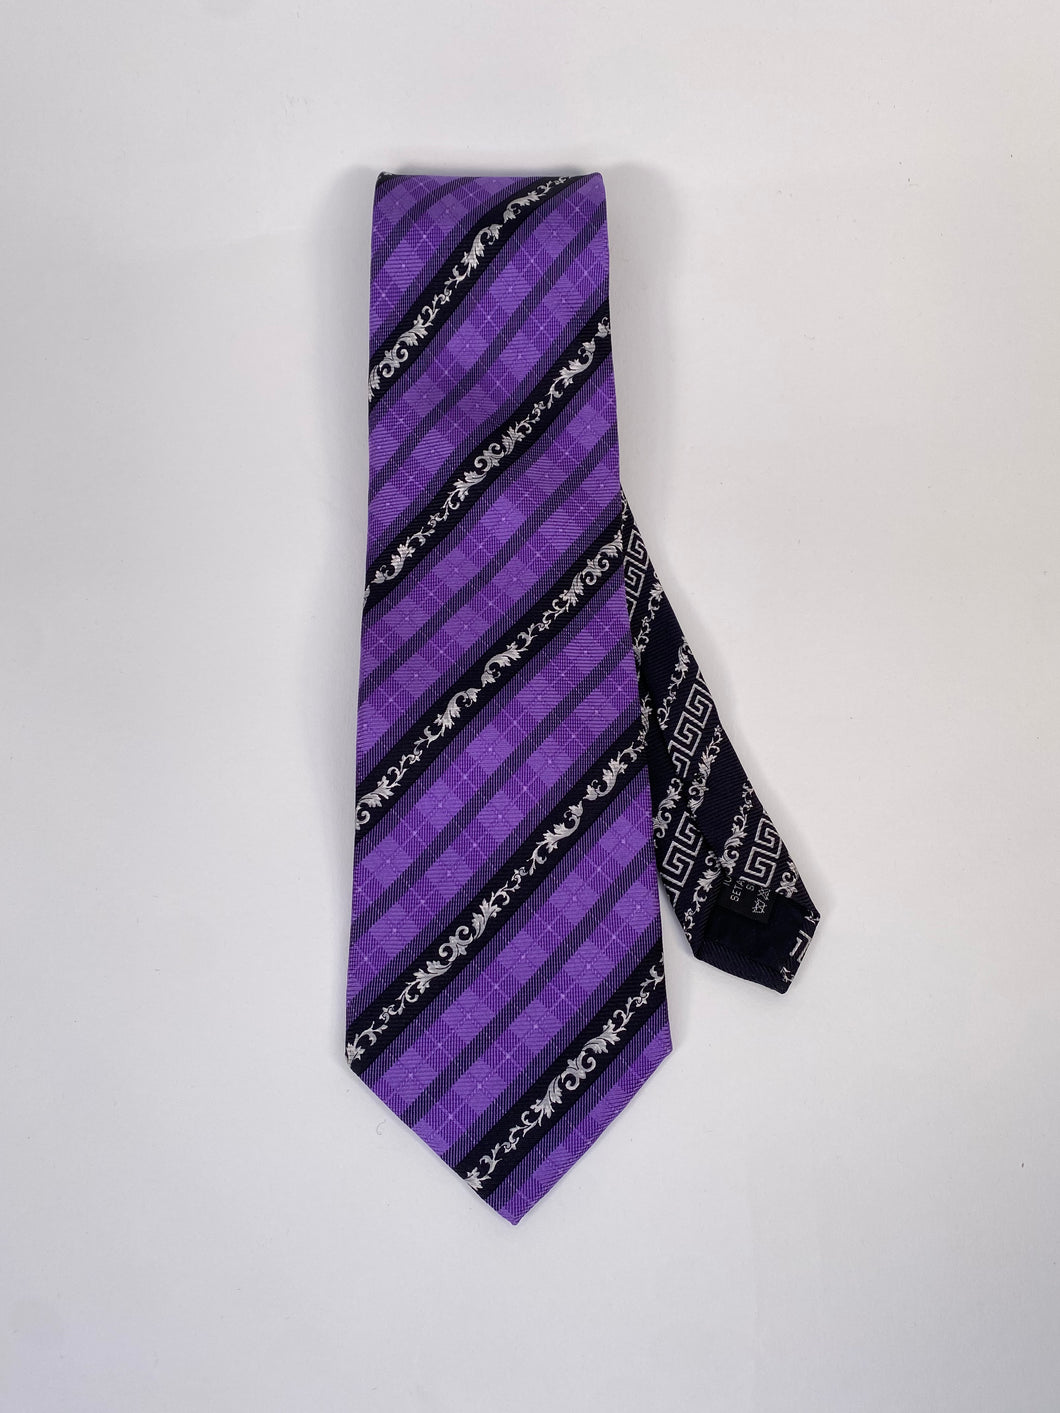 1990s Gianni Versace necktie black / purple